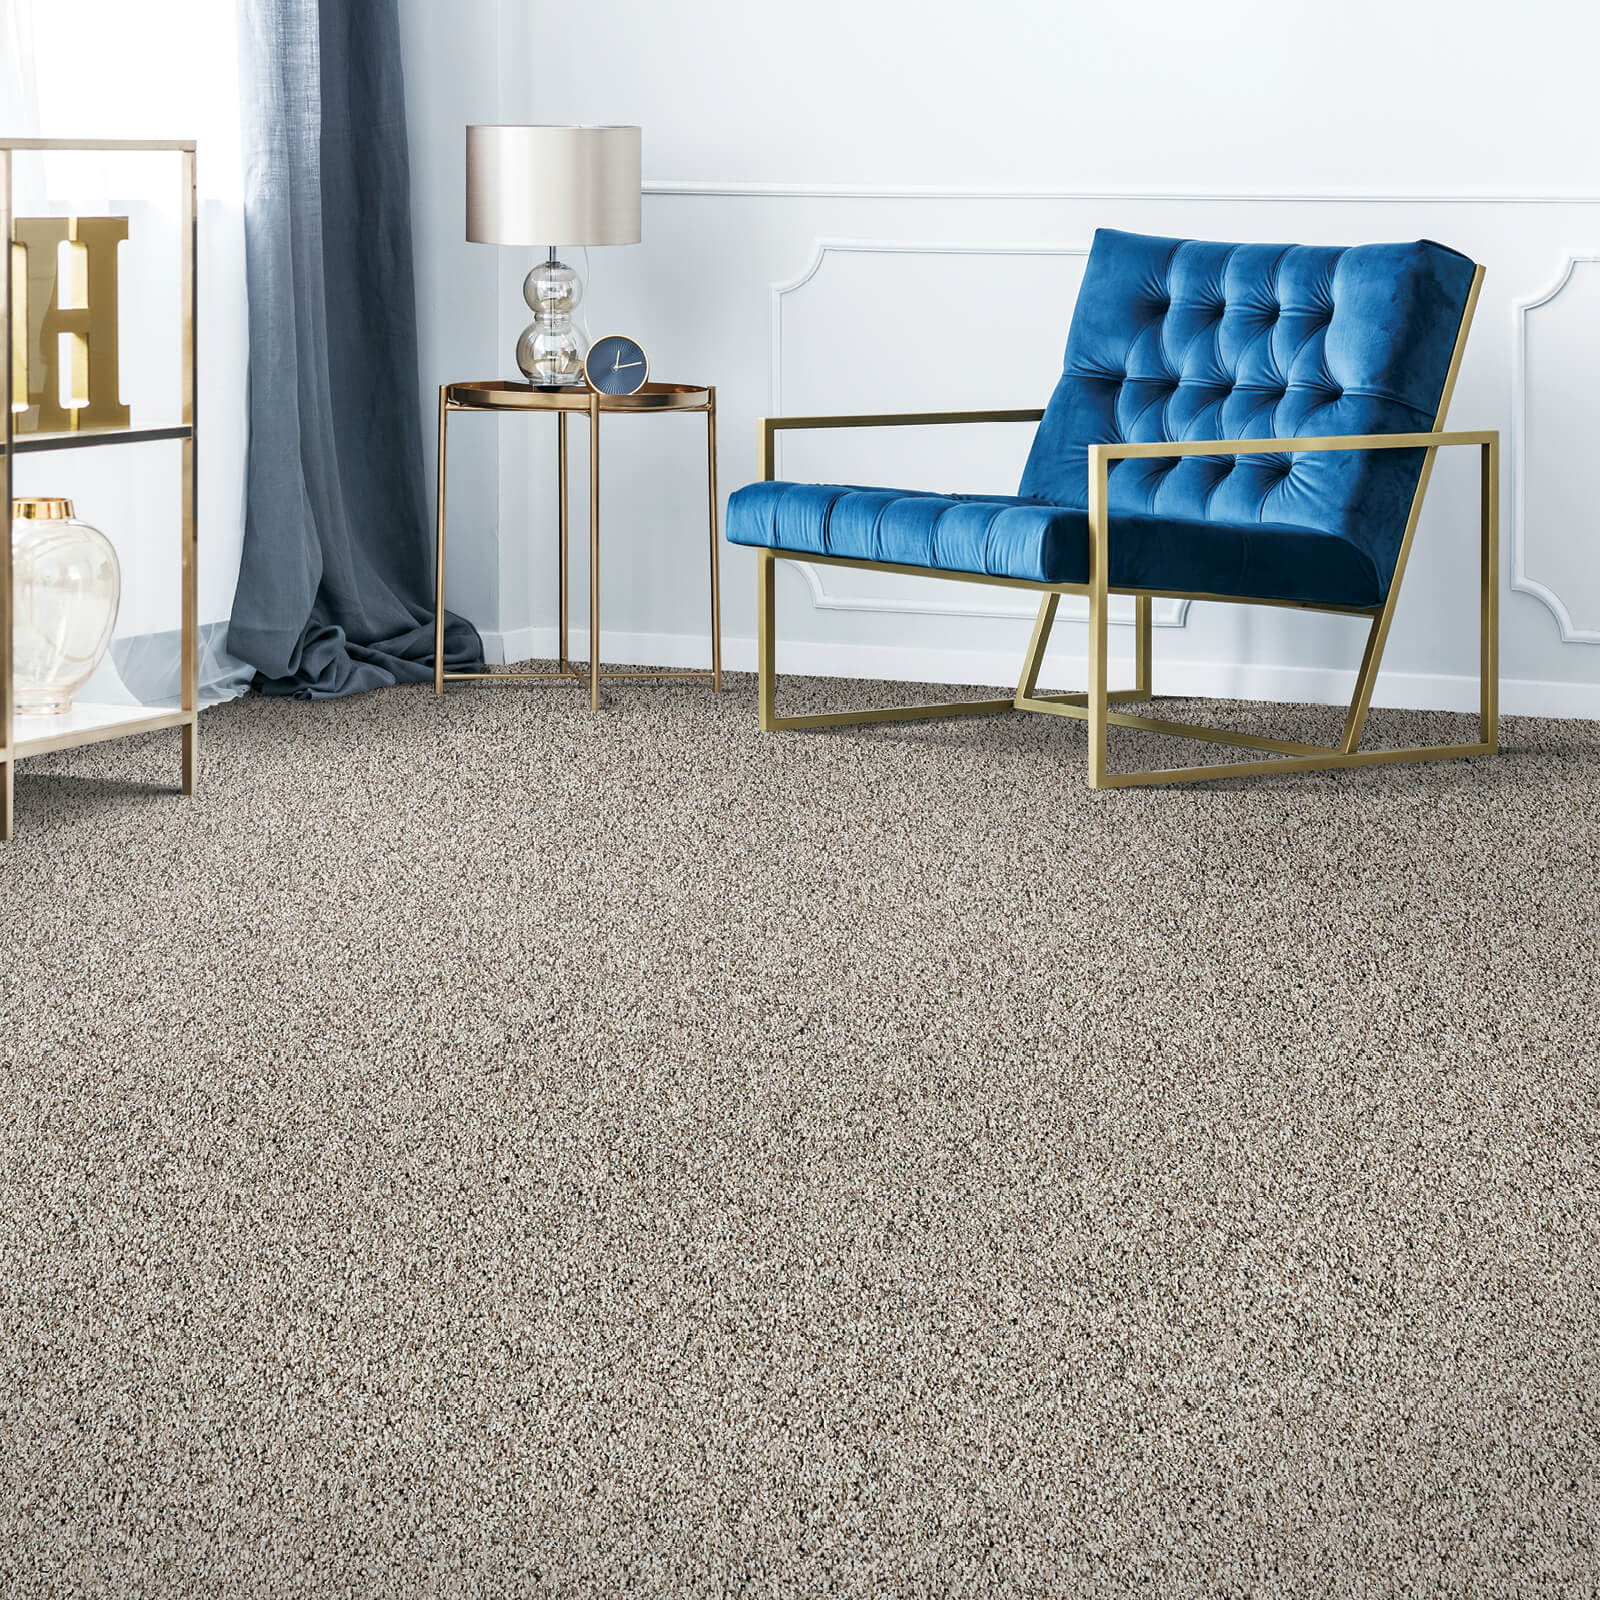 Posh Appeal carpet | Flooring by Wilson's Carpet Plus